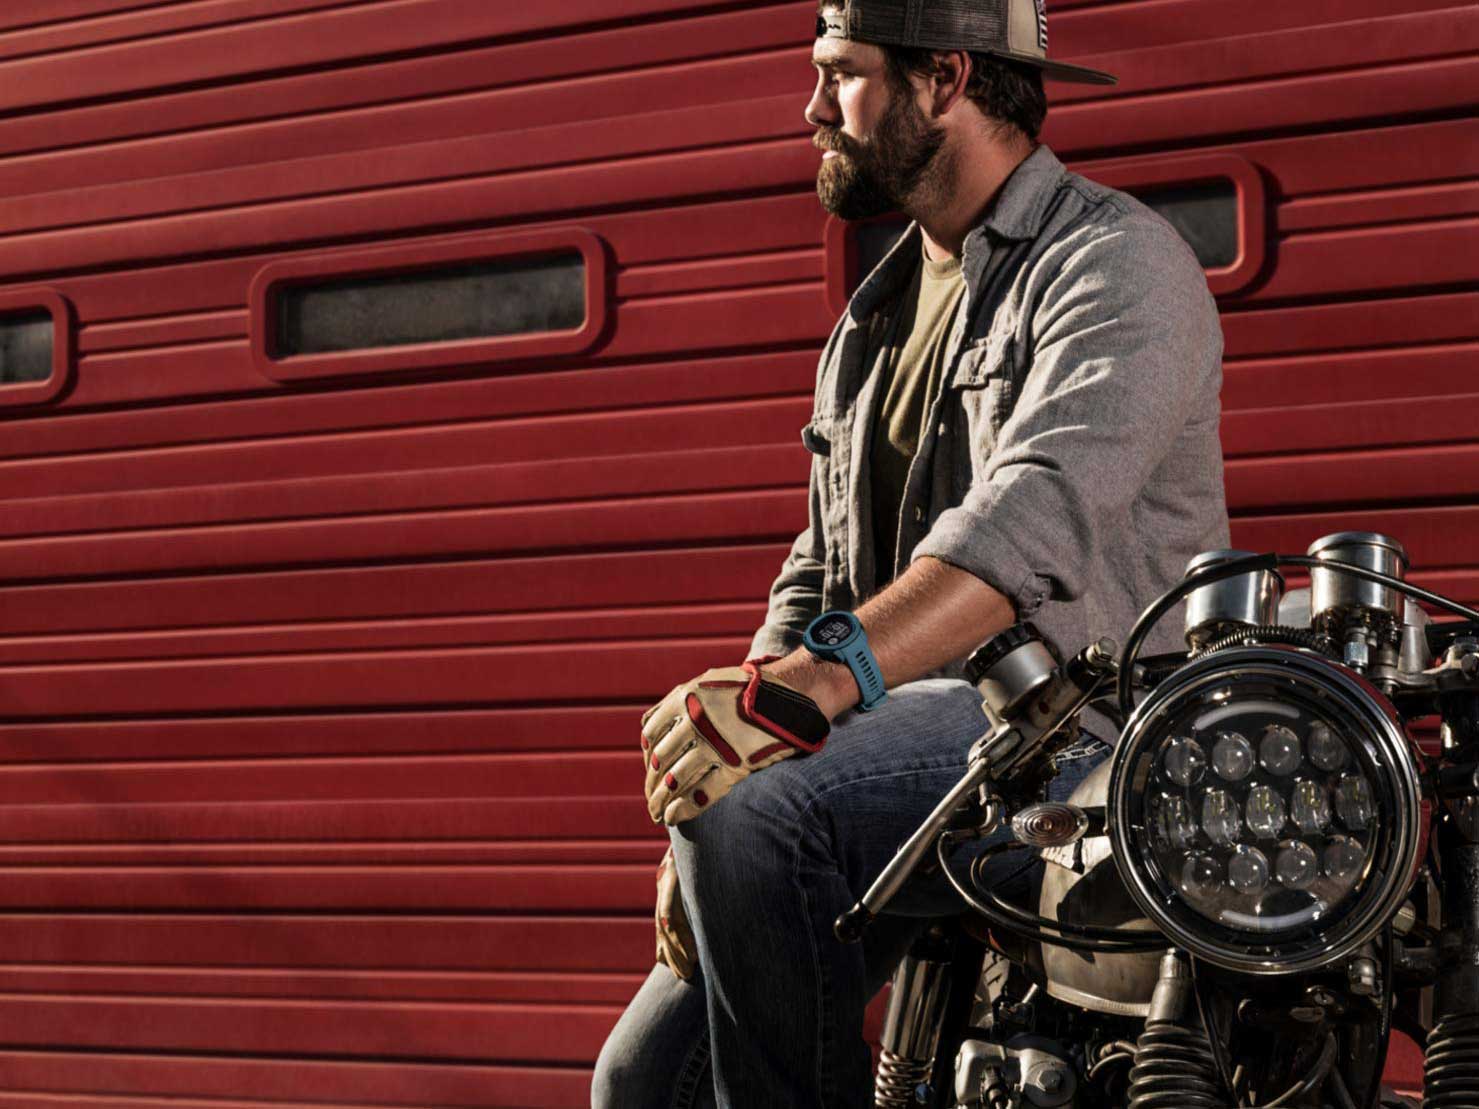 Man leaning on motorcycle wearing Garmin smartwatch.